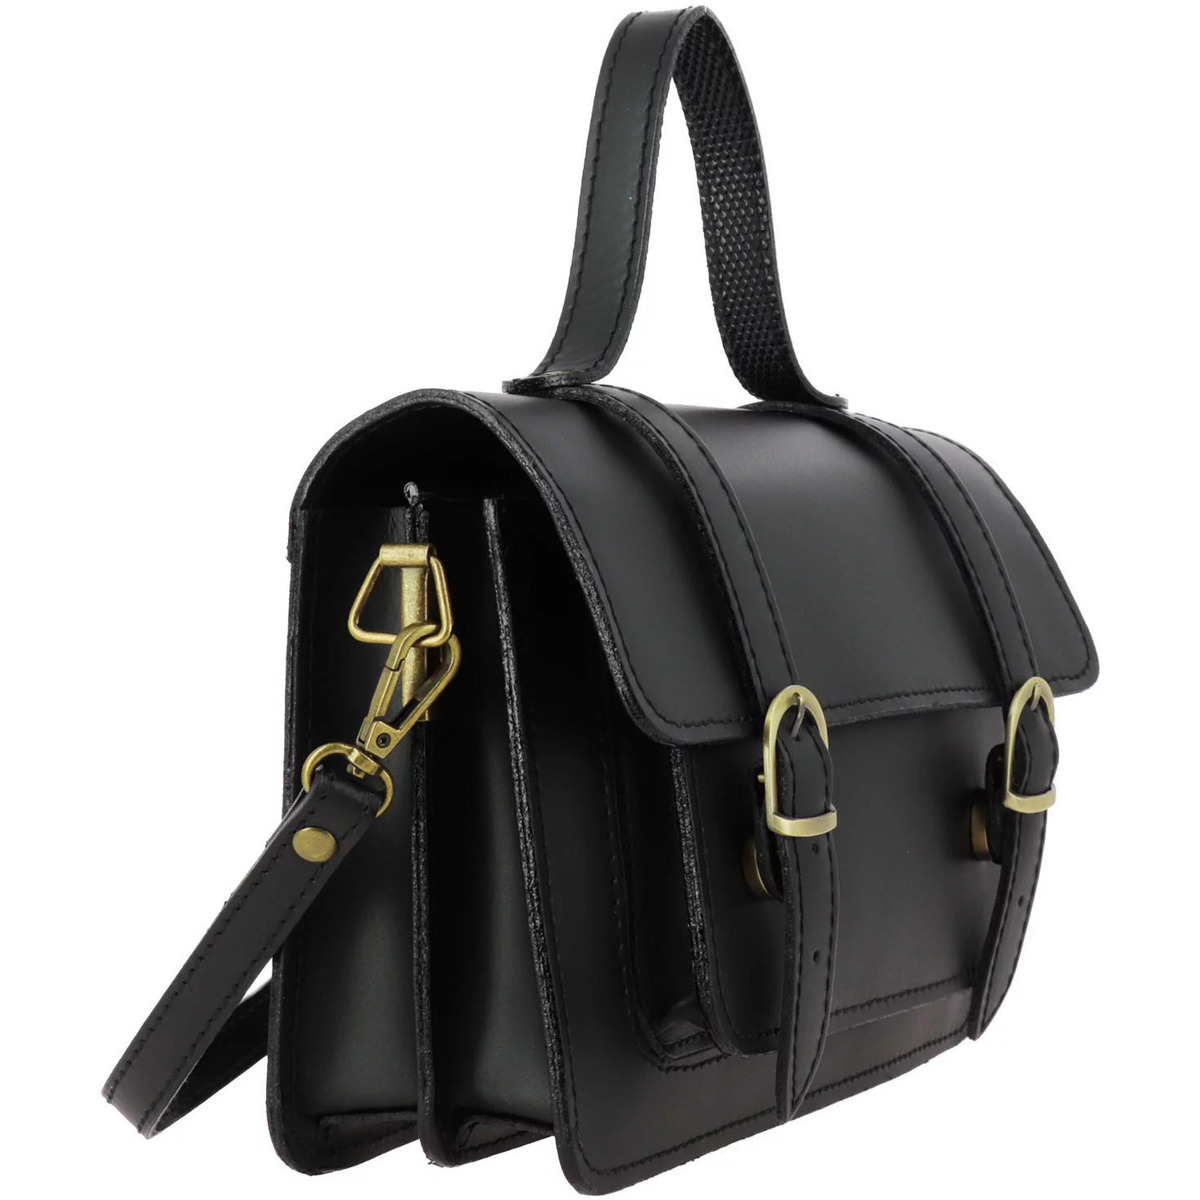 Dupond Durand Noir TILMIT sac cartable vintage en cuir 89hVDq0r